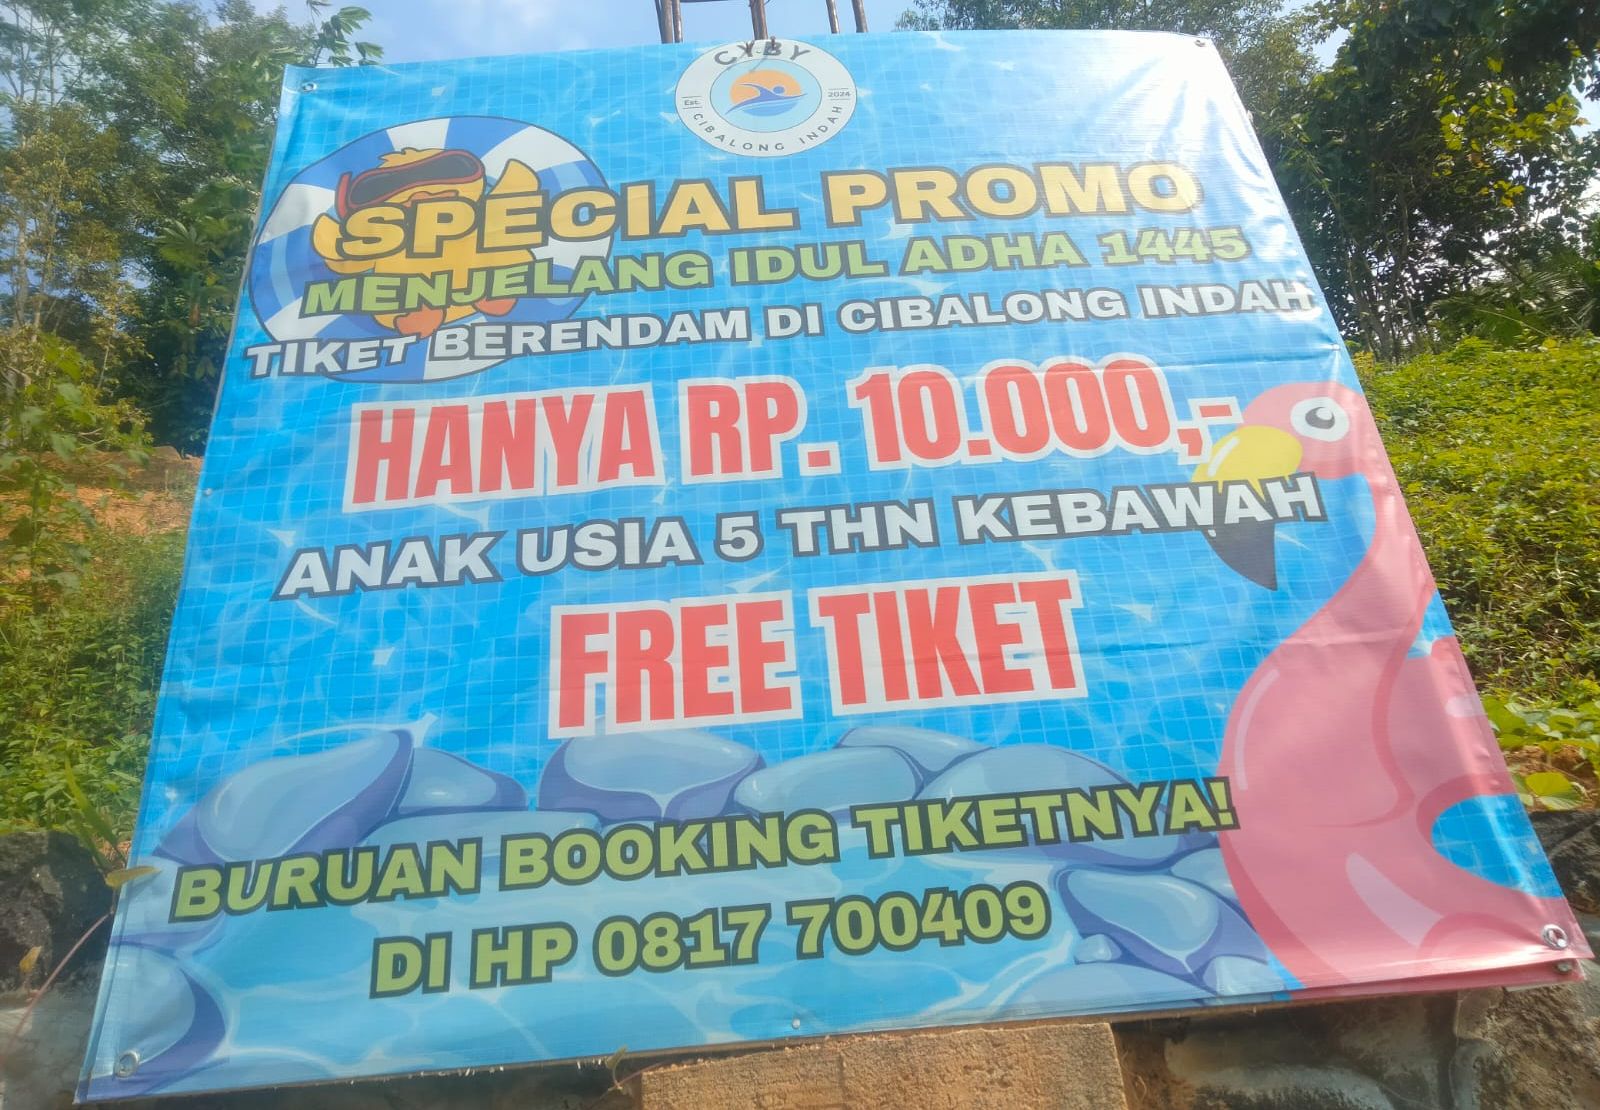 Pemandian air panas Cibalong Indah sedang memberikan promo selama bulan haji ini. 